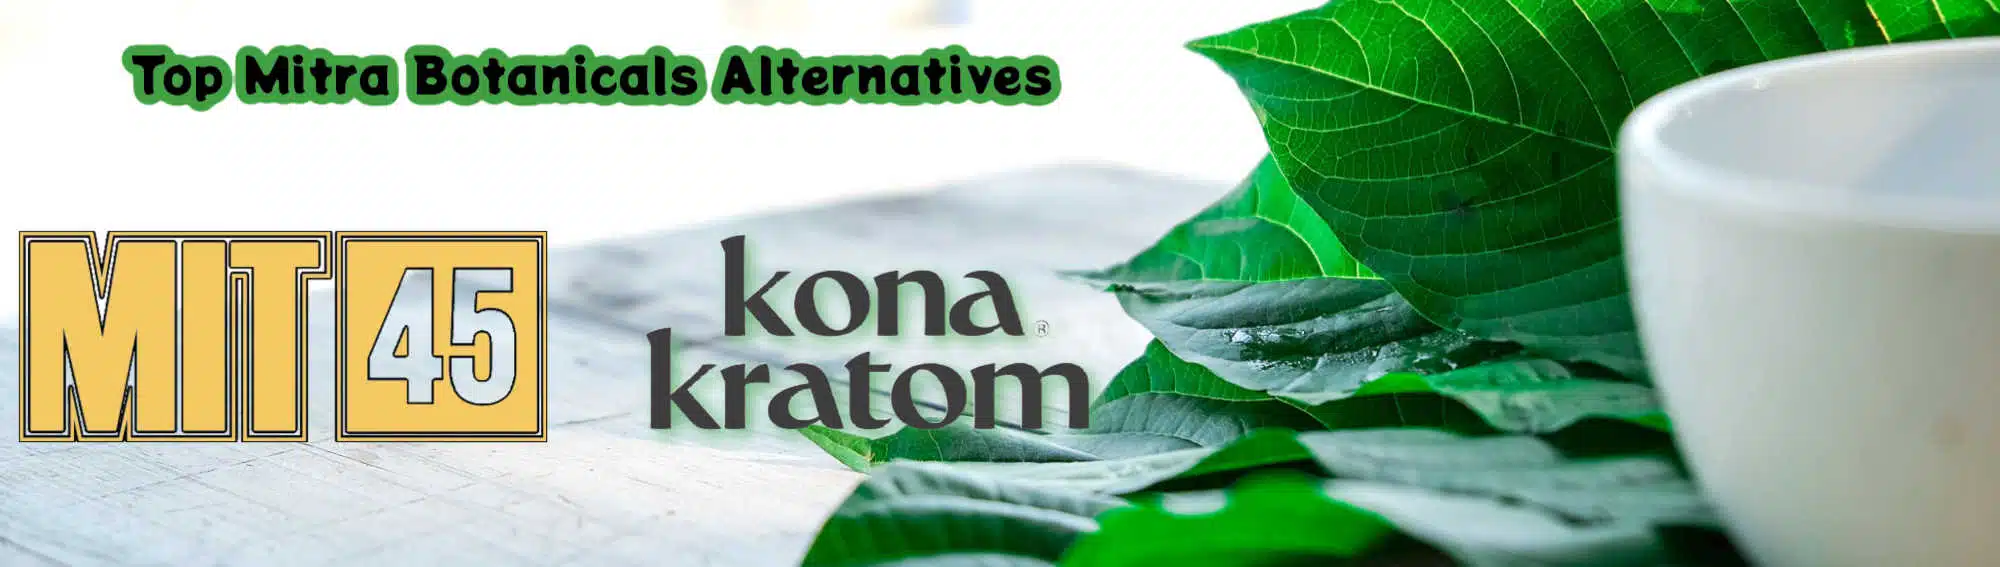 "Top mitra botanicals alternatives" banner with MIT45 and Kona Kratom logos